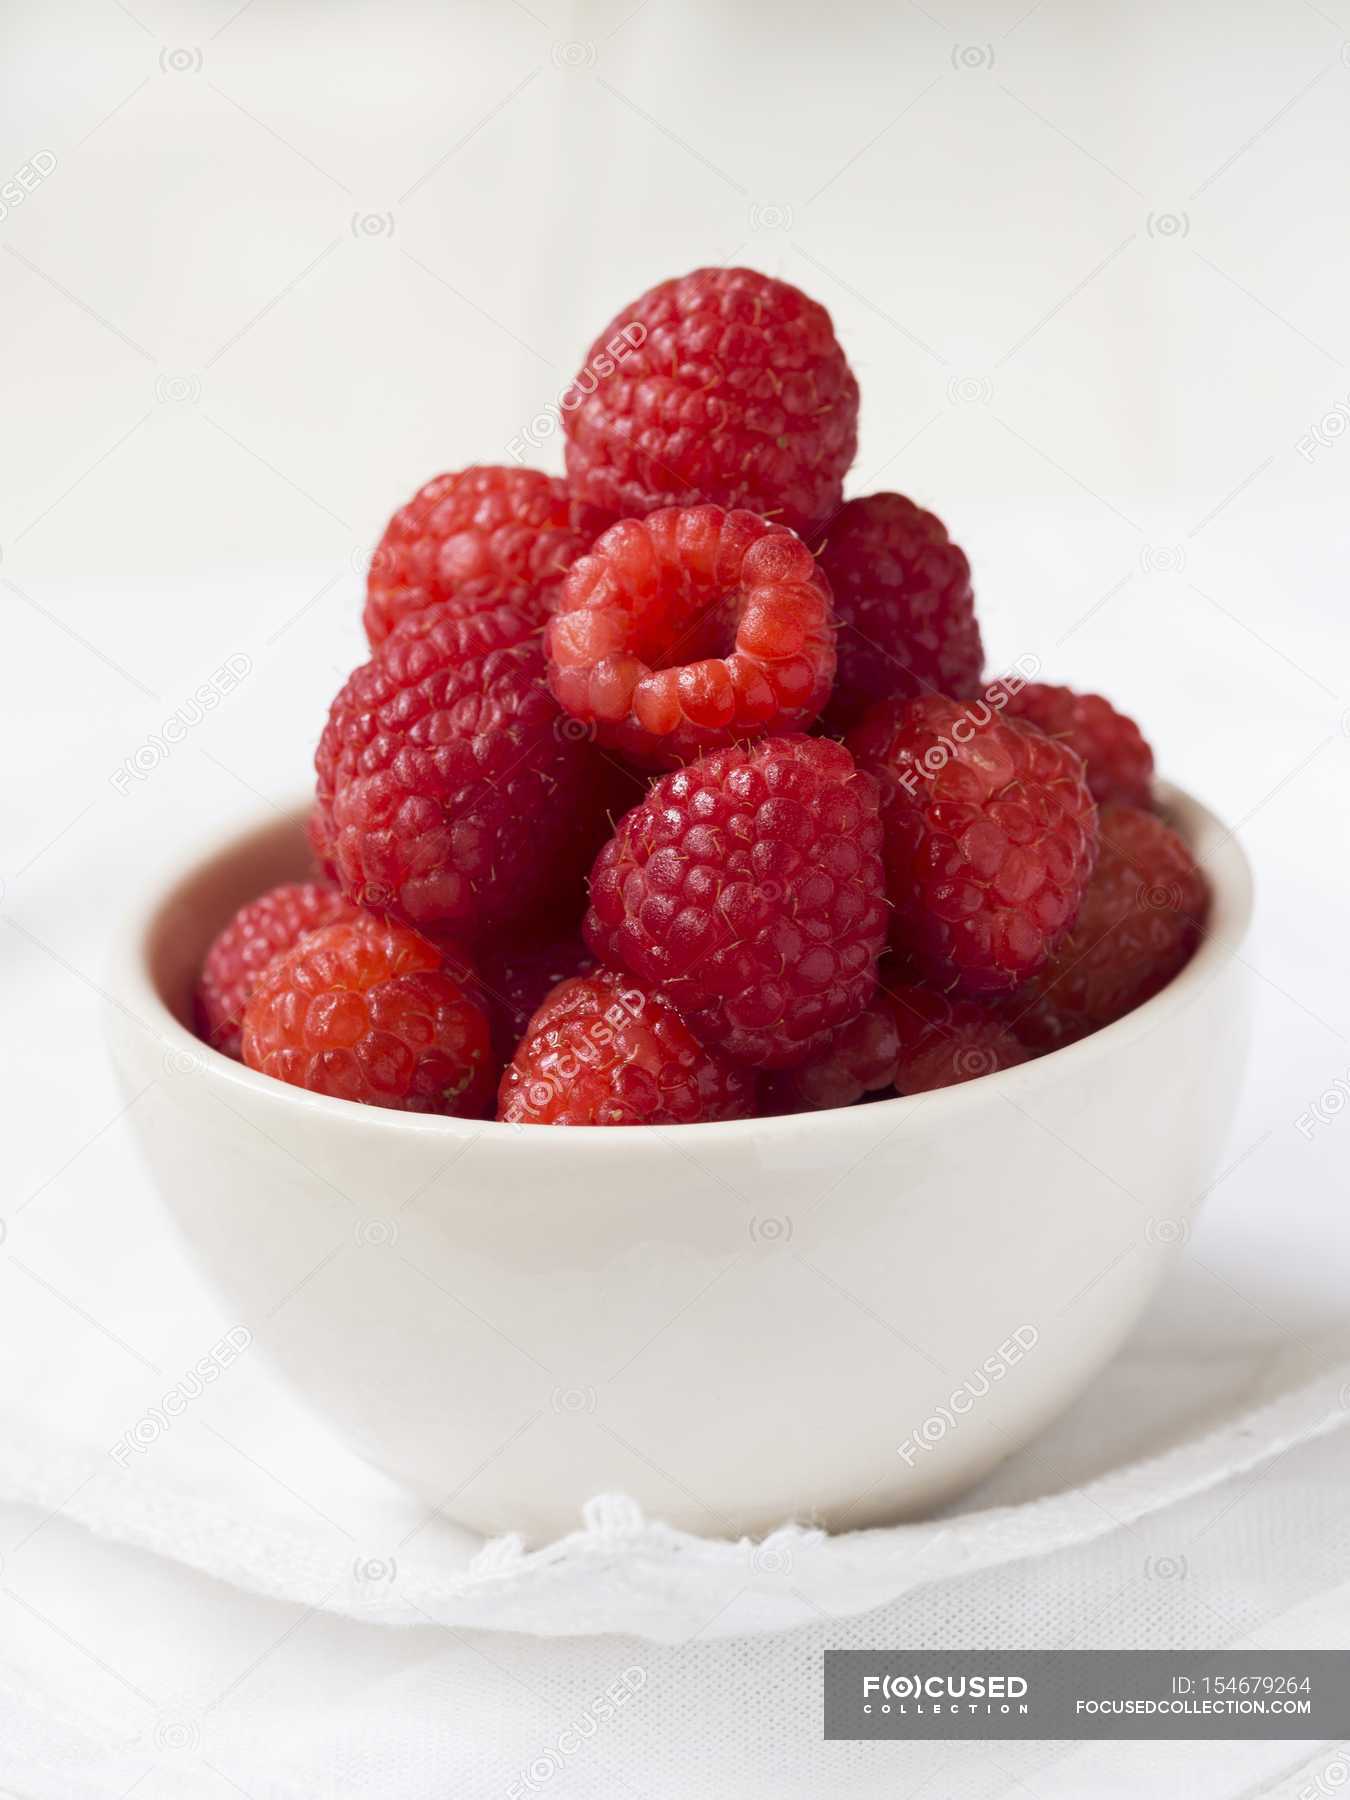 Image of Bowl of fresh raspberries